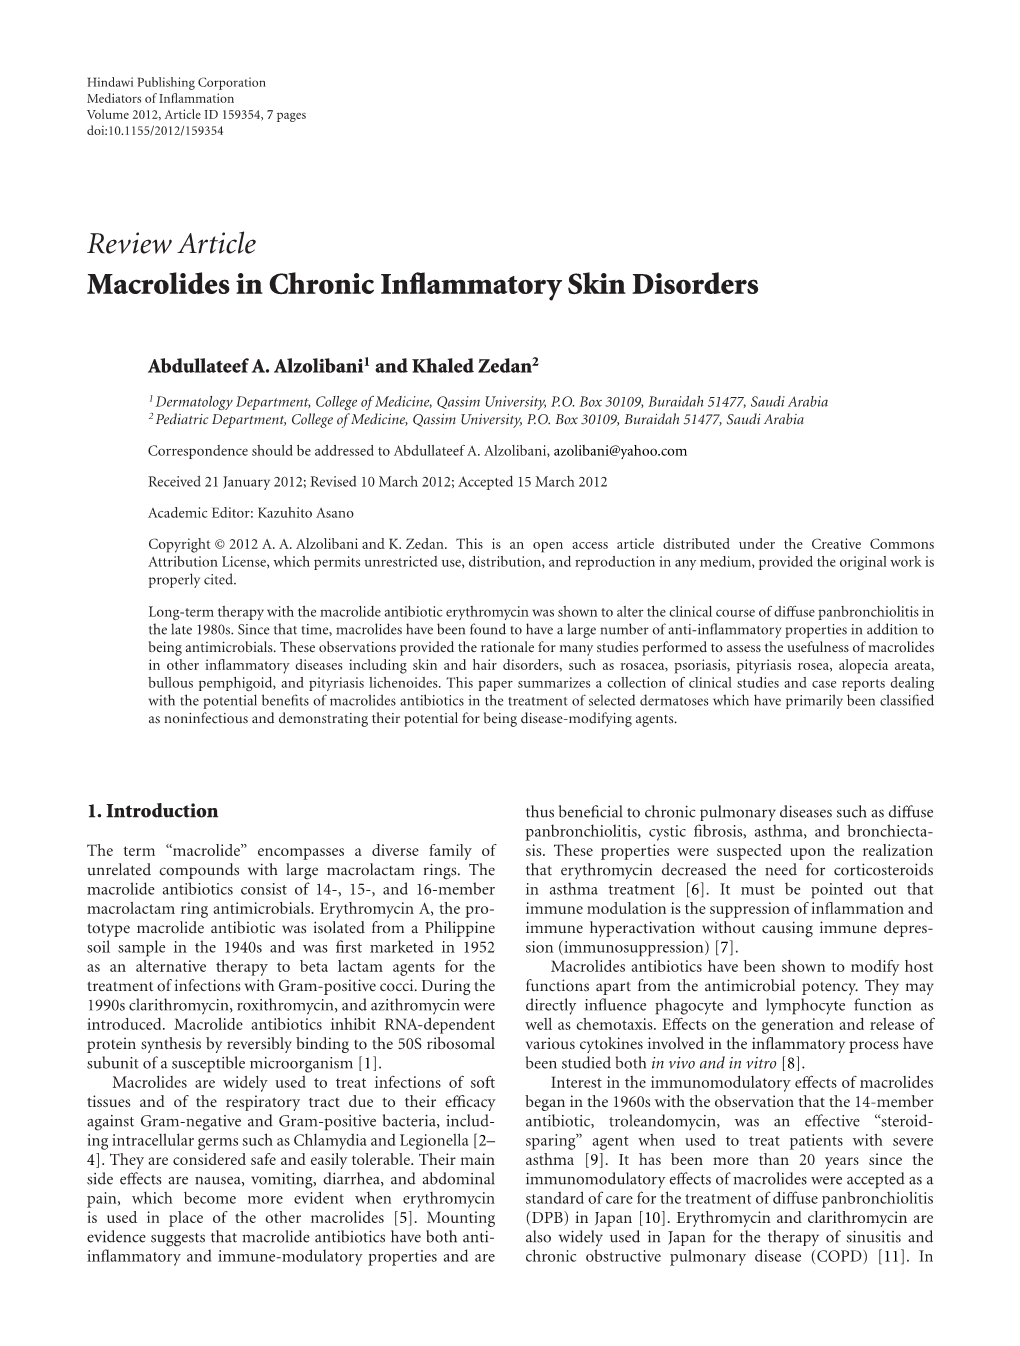 Macrolides in Chronic Inflammatory Skin Disorders